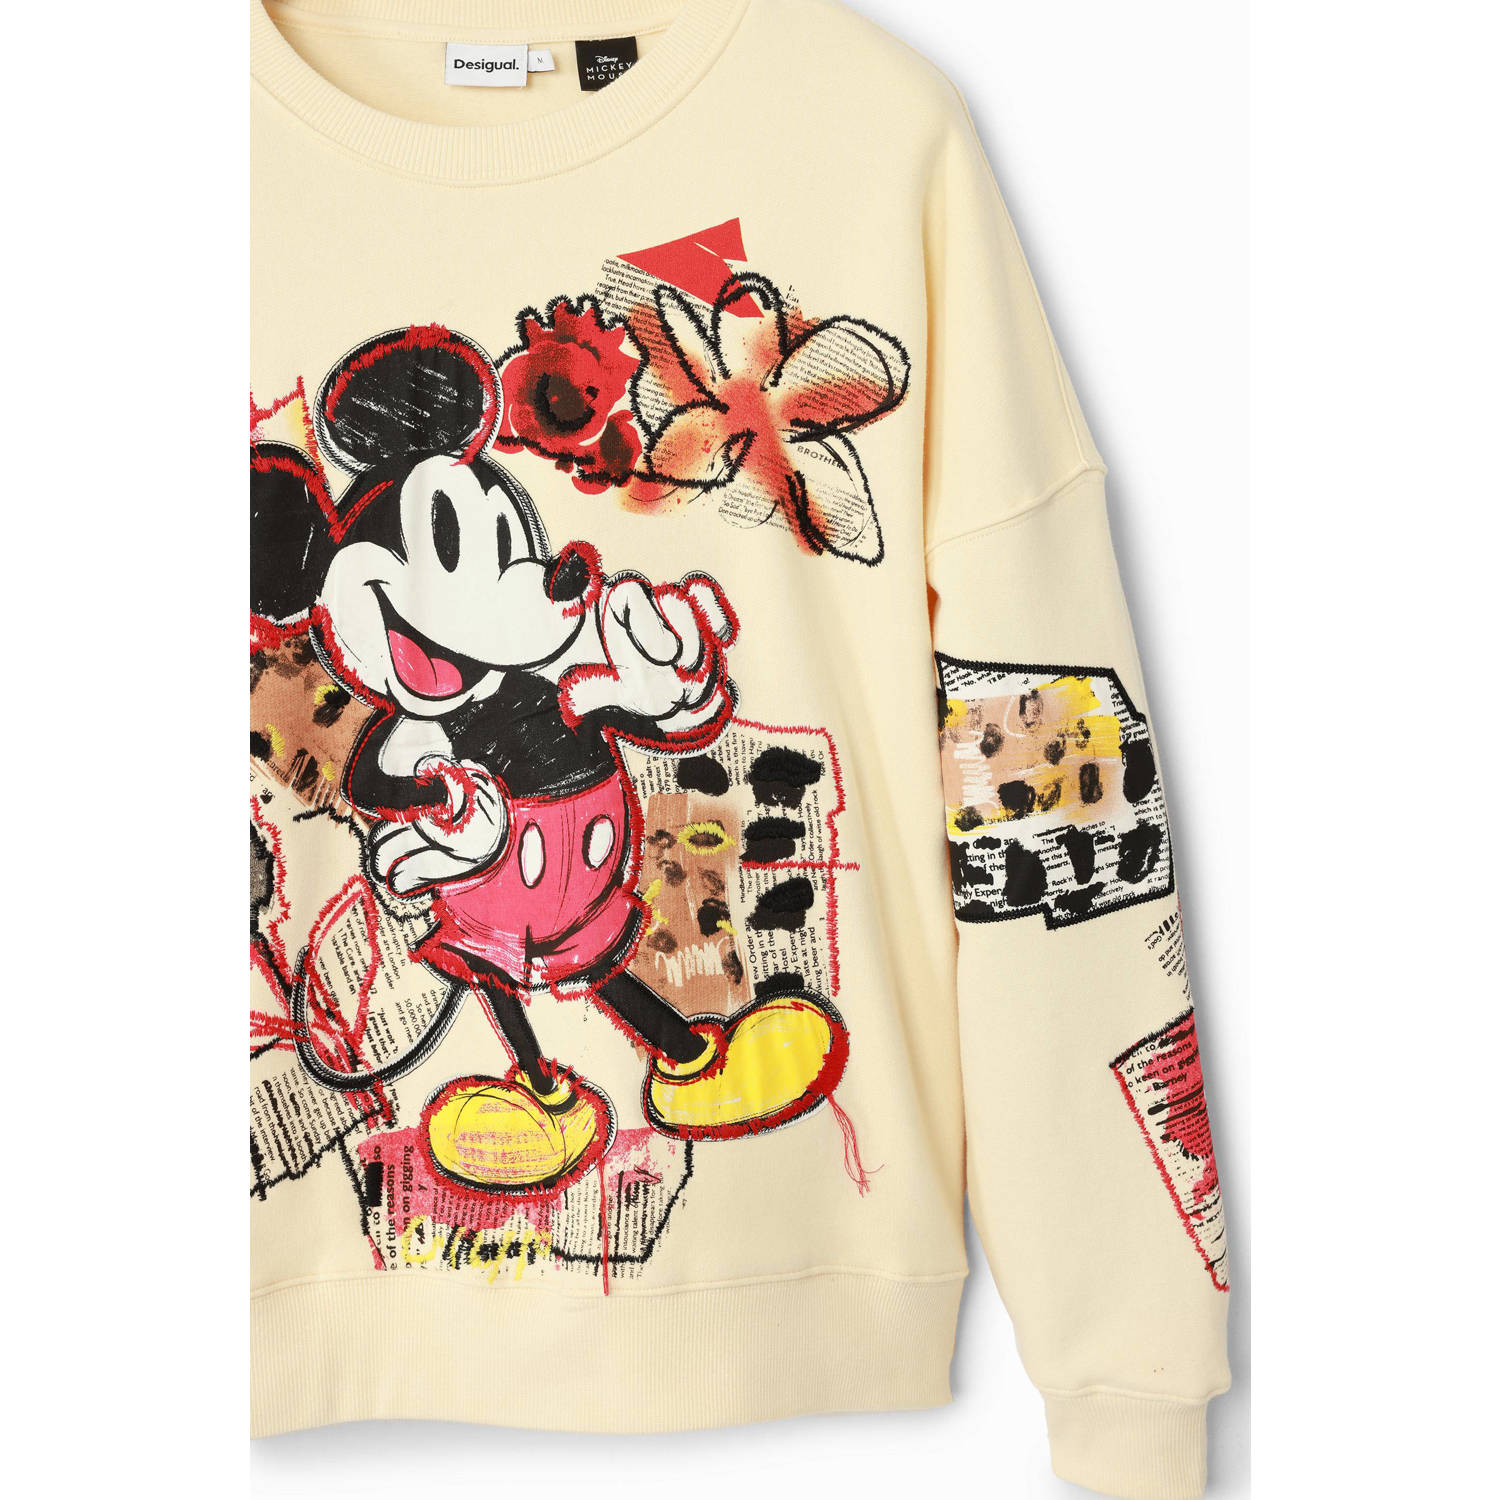 Desigual sweater met mickey mouse print ecru